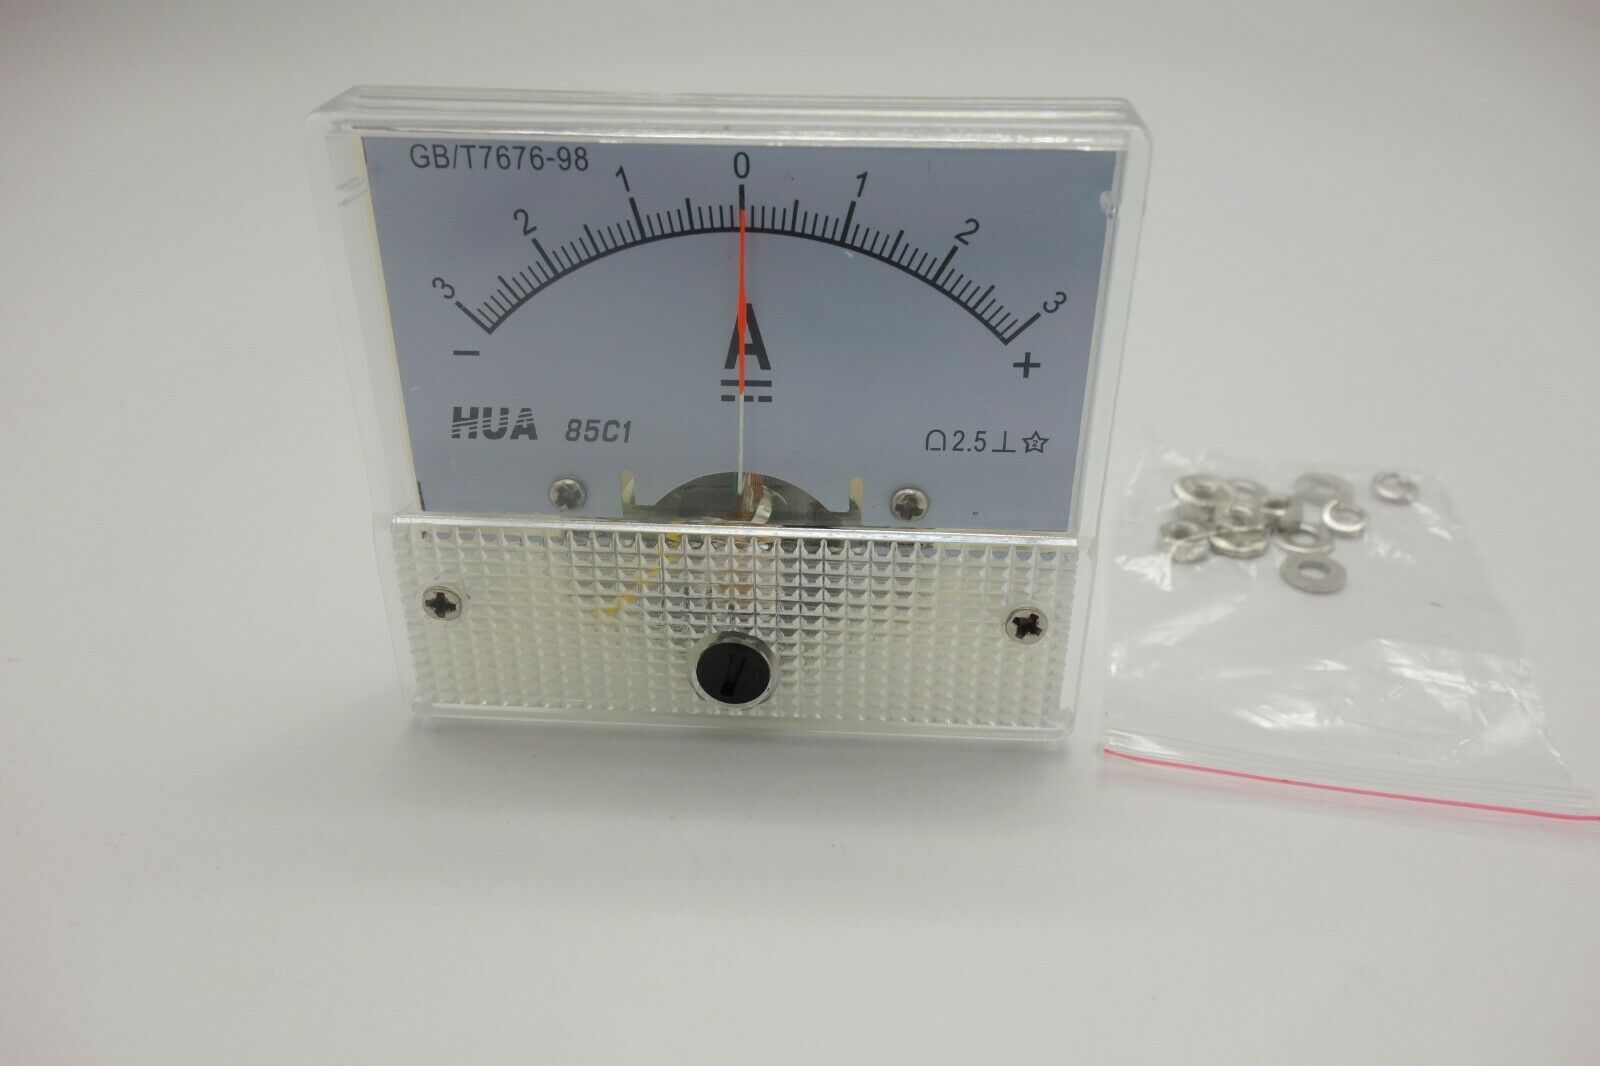 1pc DC Minus Zero Plus -3A - +3A Analog 85C1 Analogue Ammeter AMP Panel meter